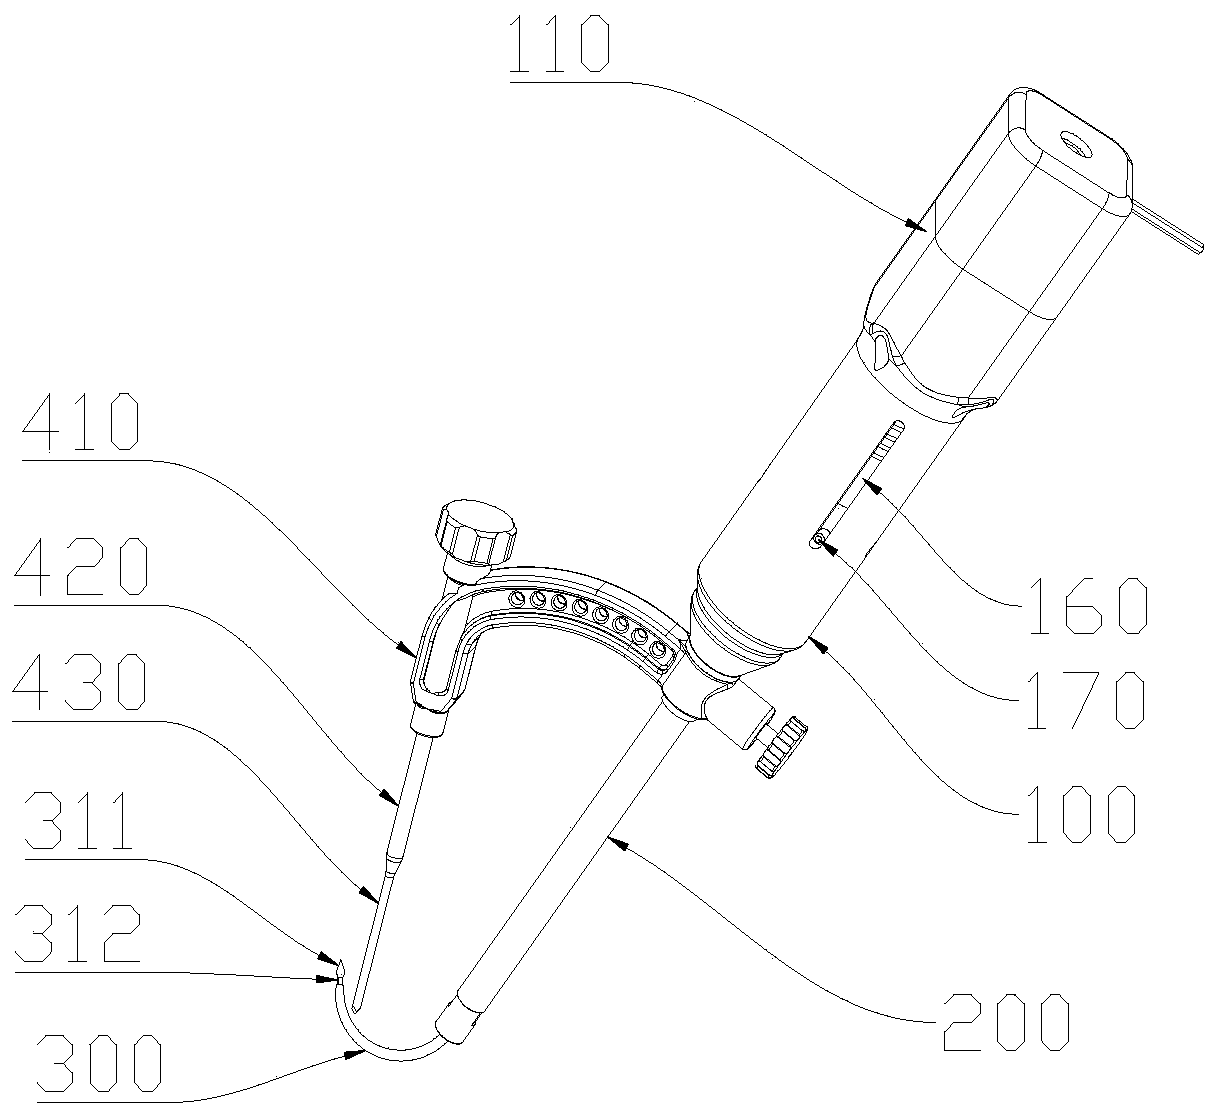 Electrically driven rotator cuff repair instrument